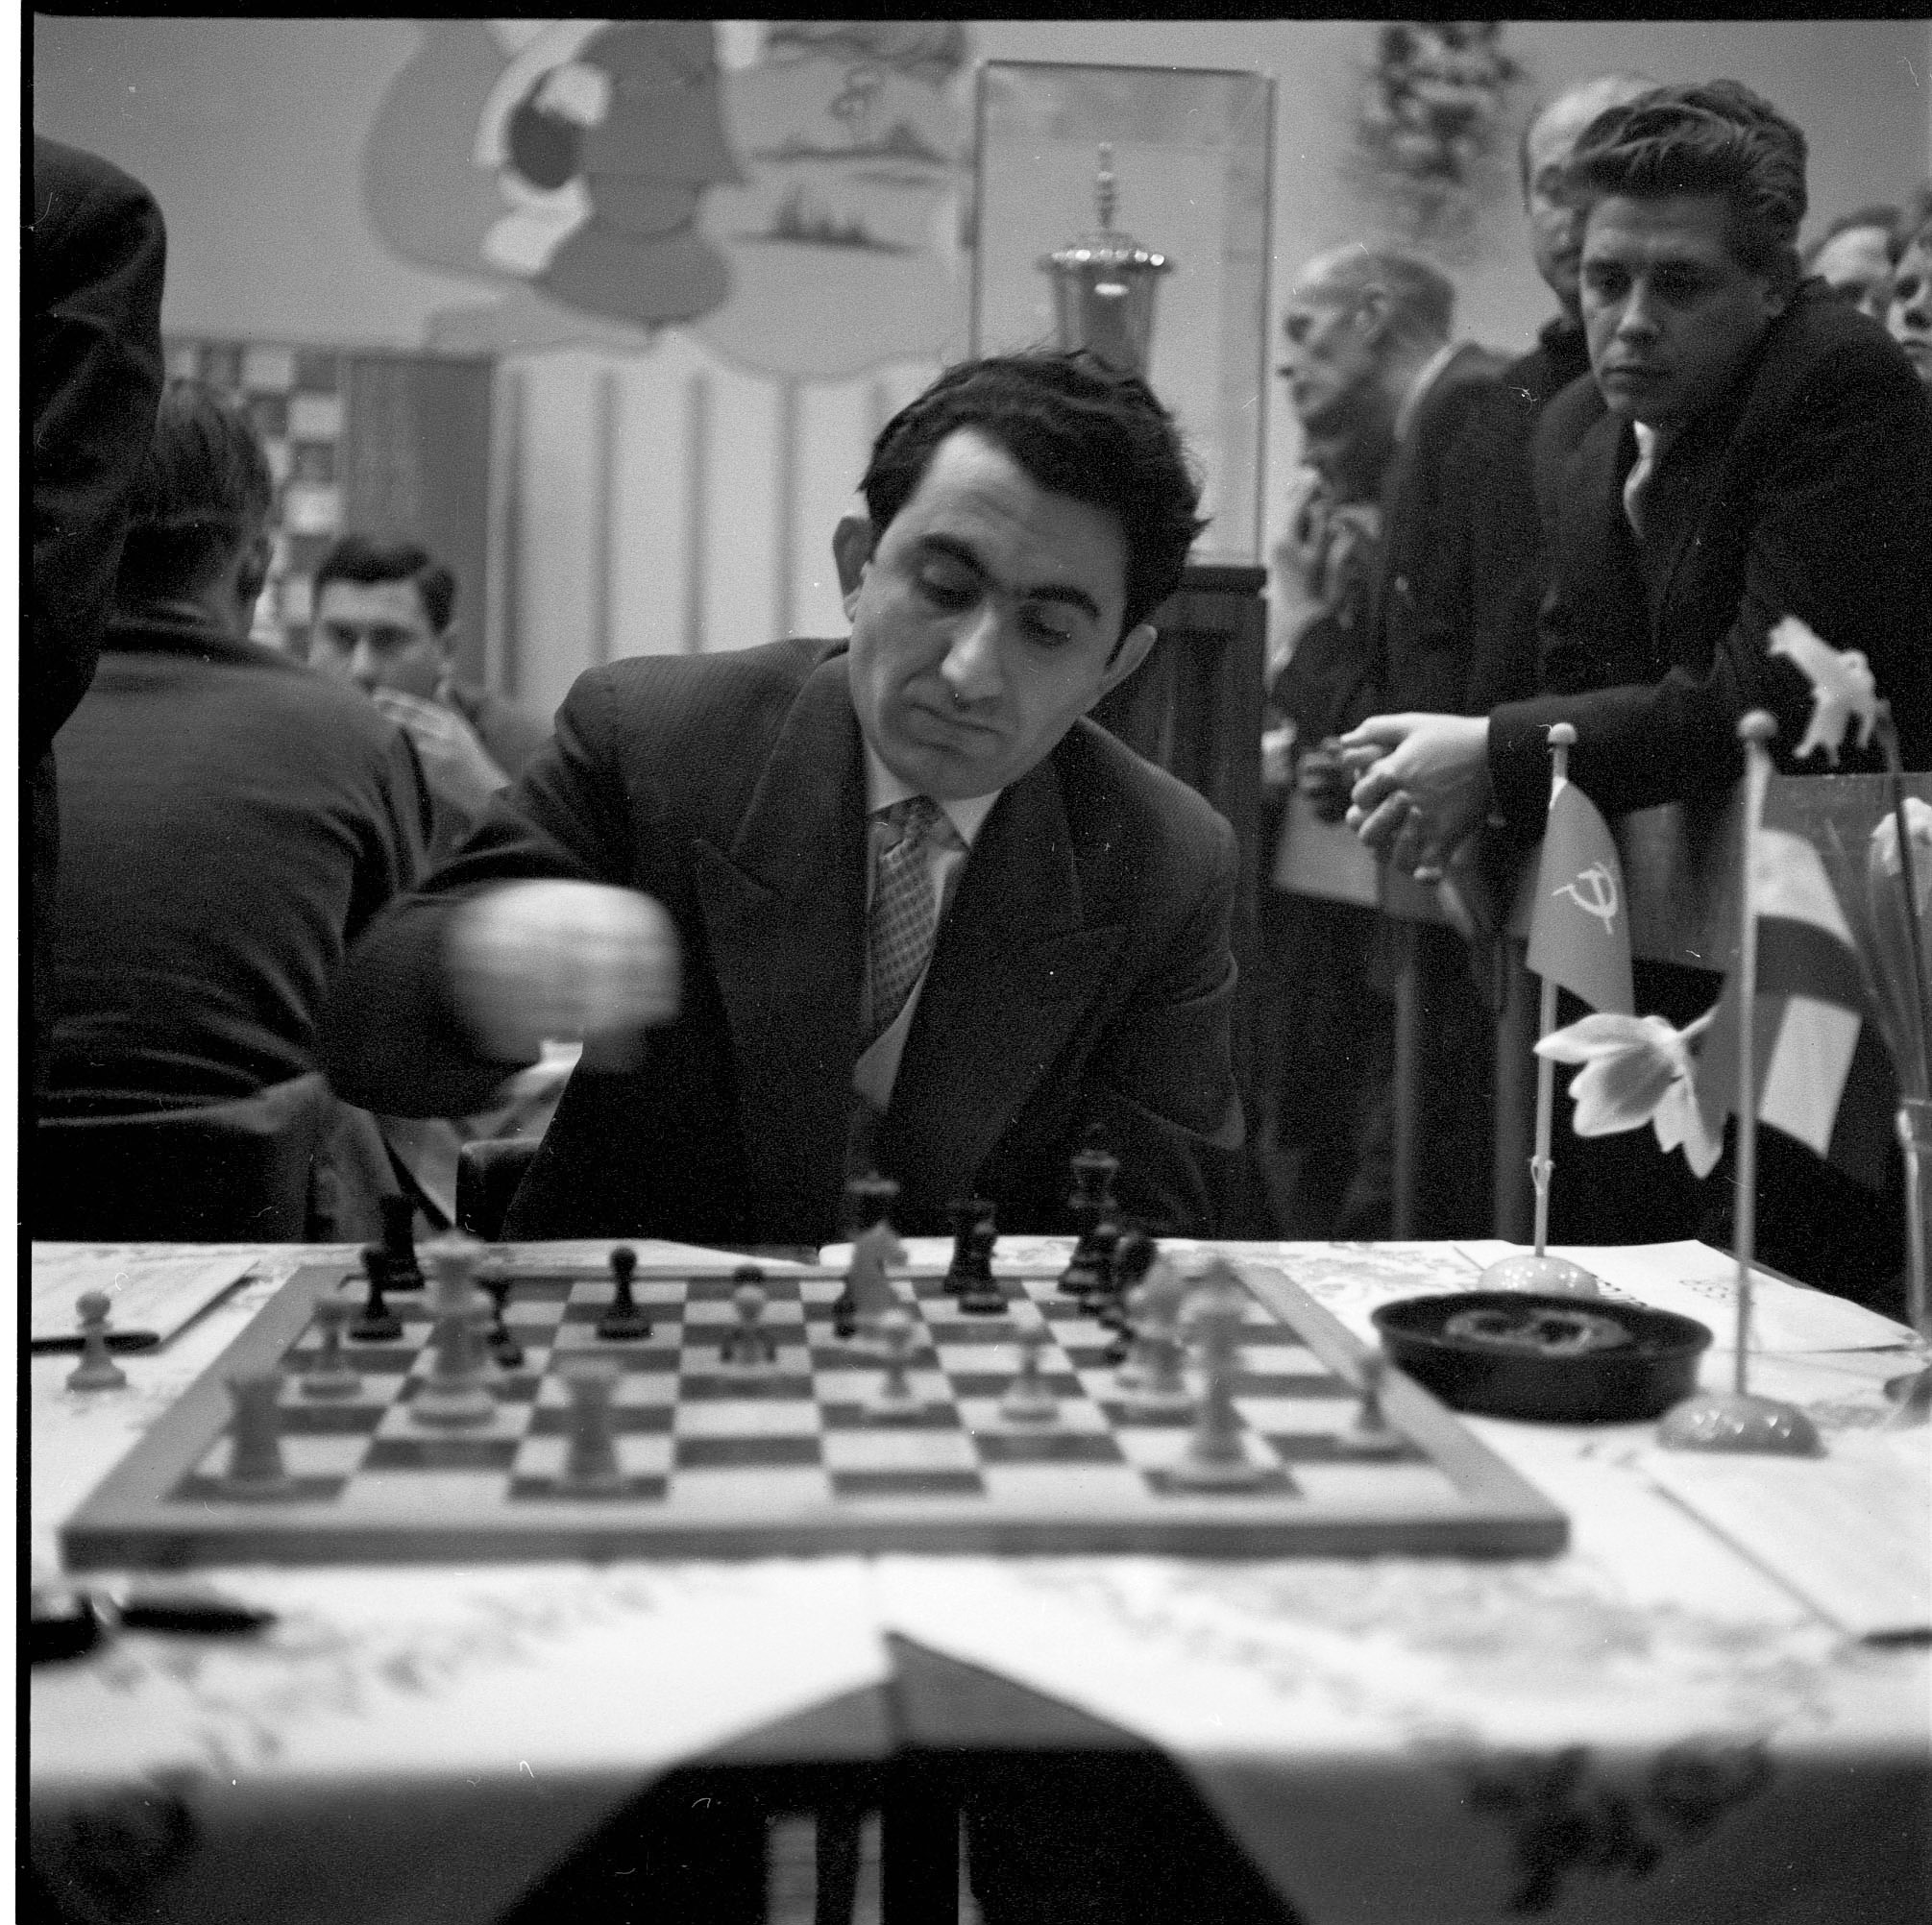 Amazing Chess Game, Boris Spassky vs Tigran Petrosian